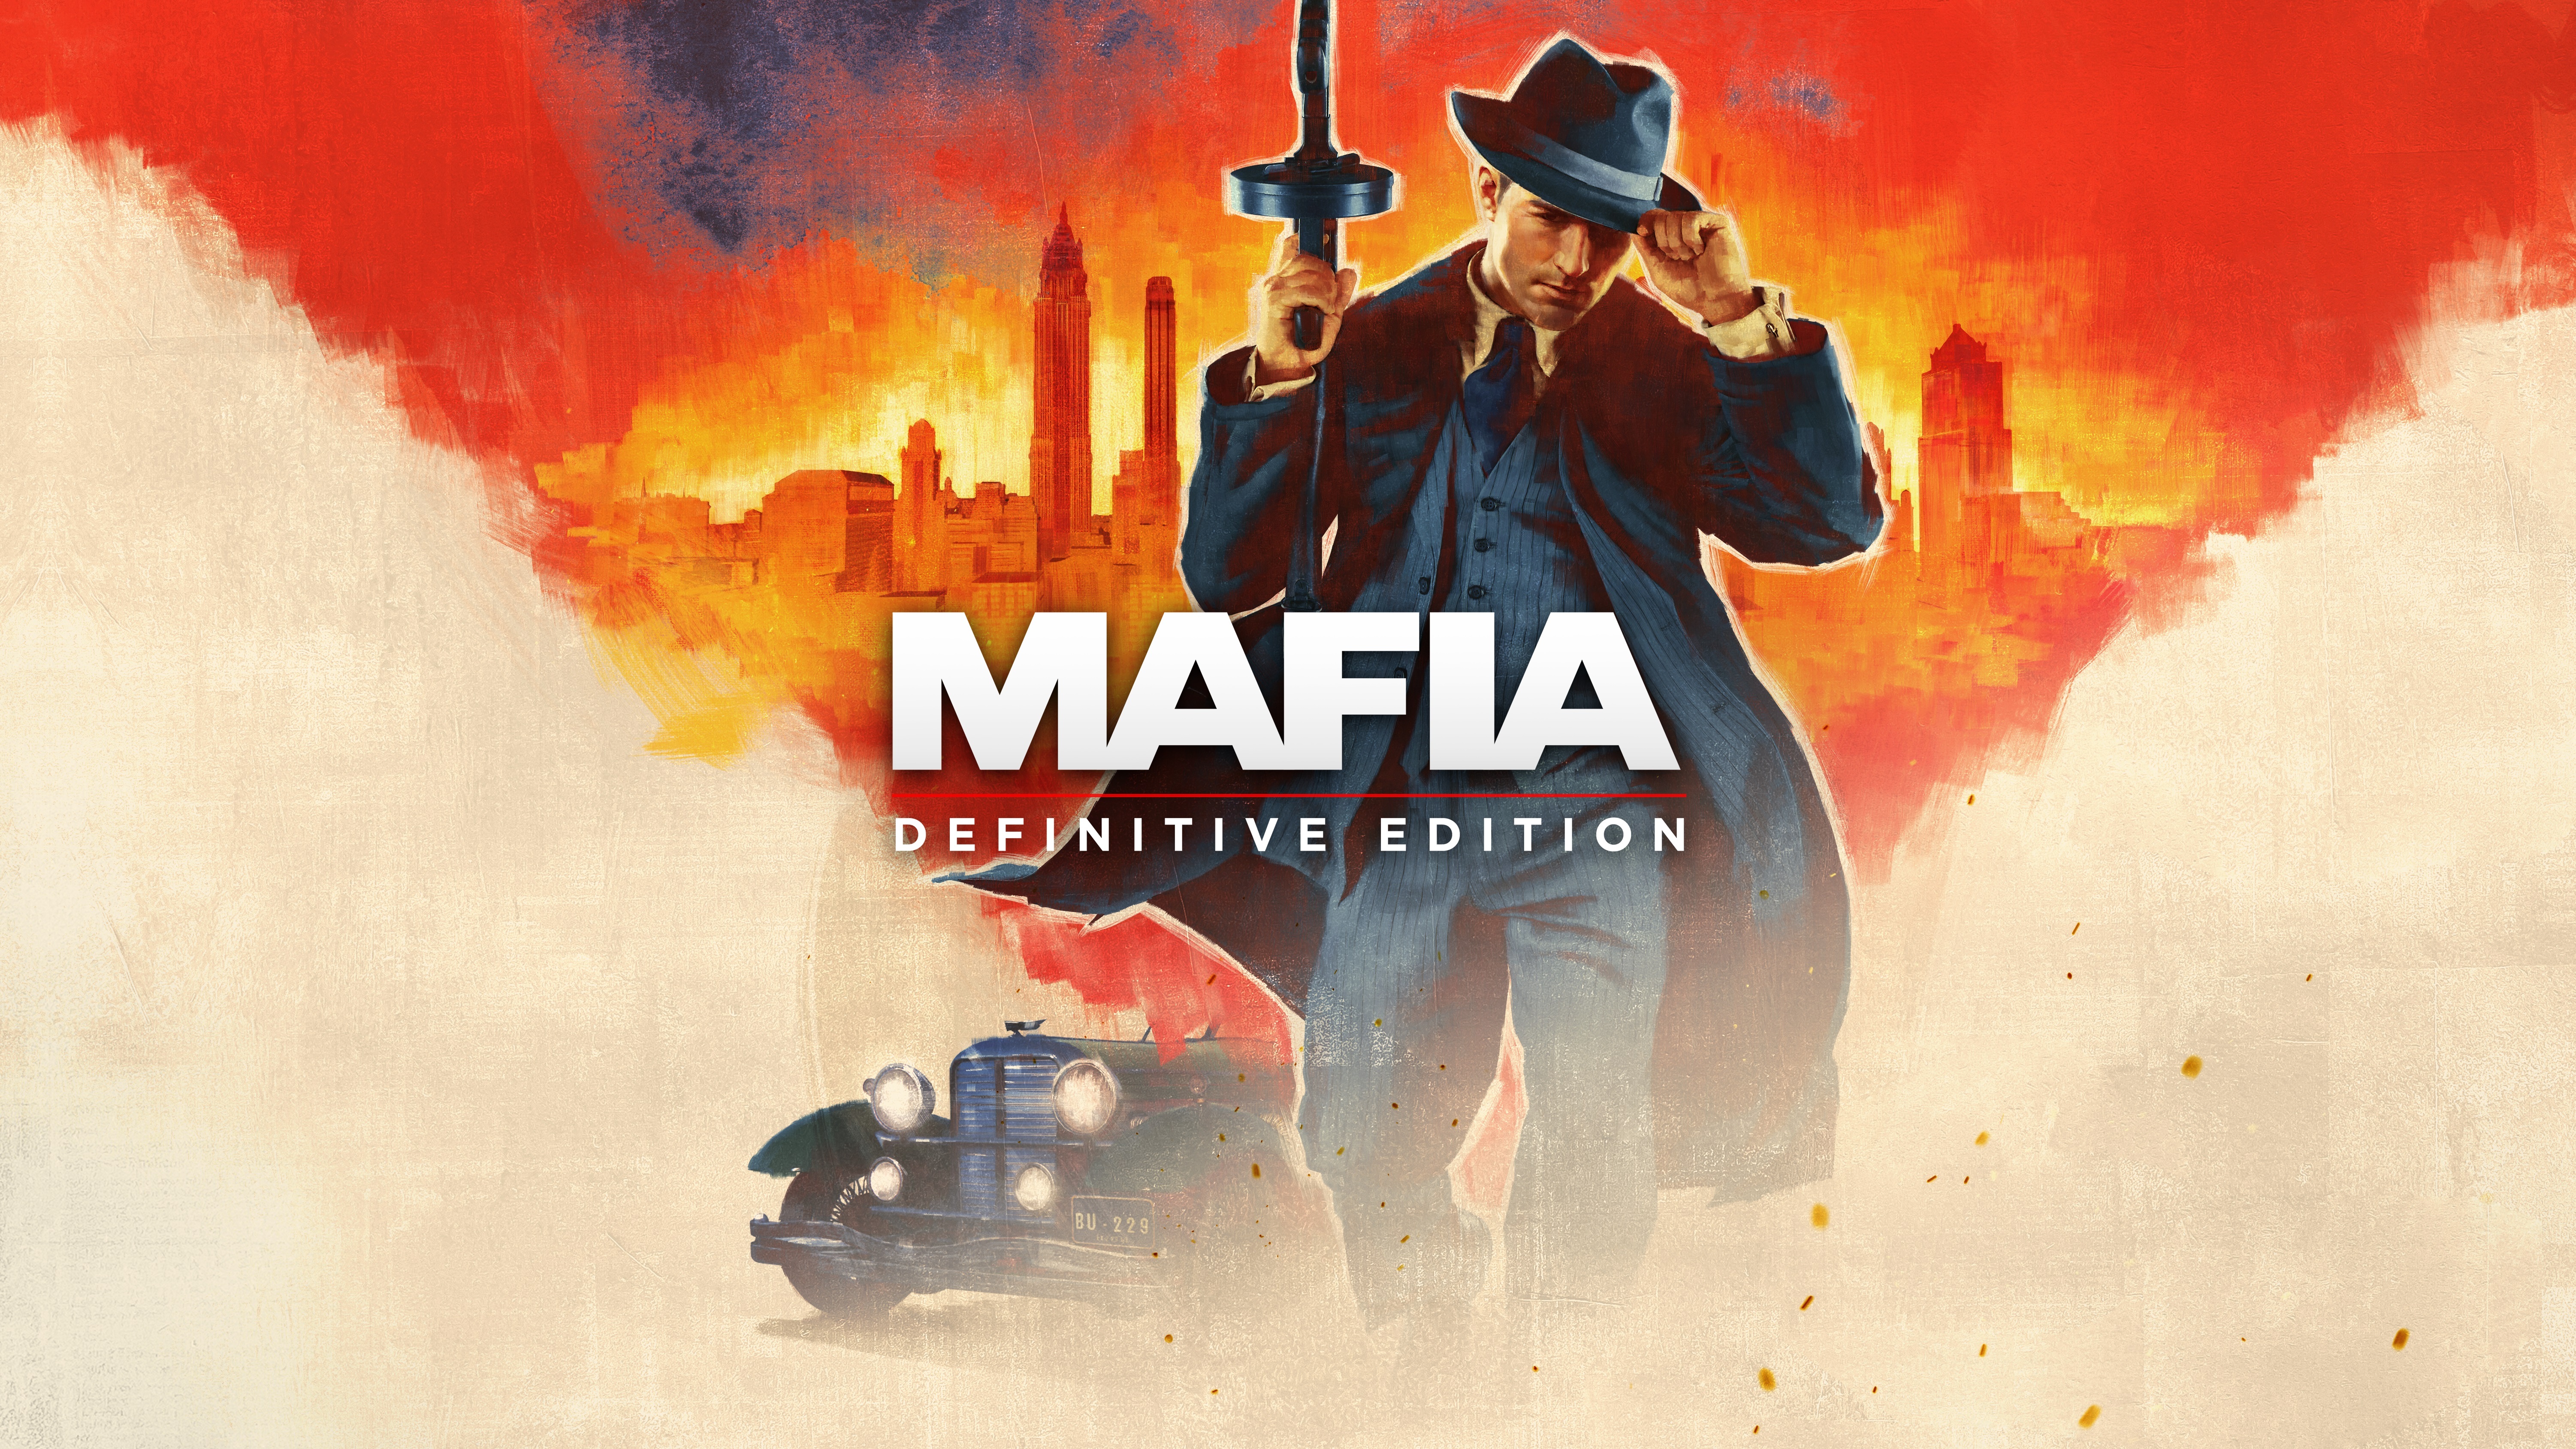 Mafia: Trilogy - Metacritic